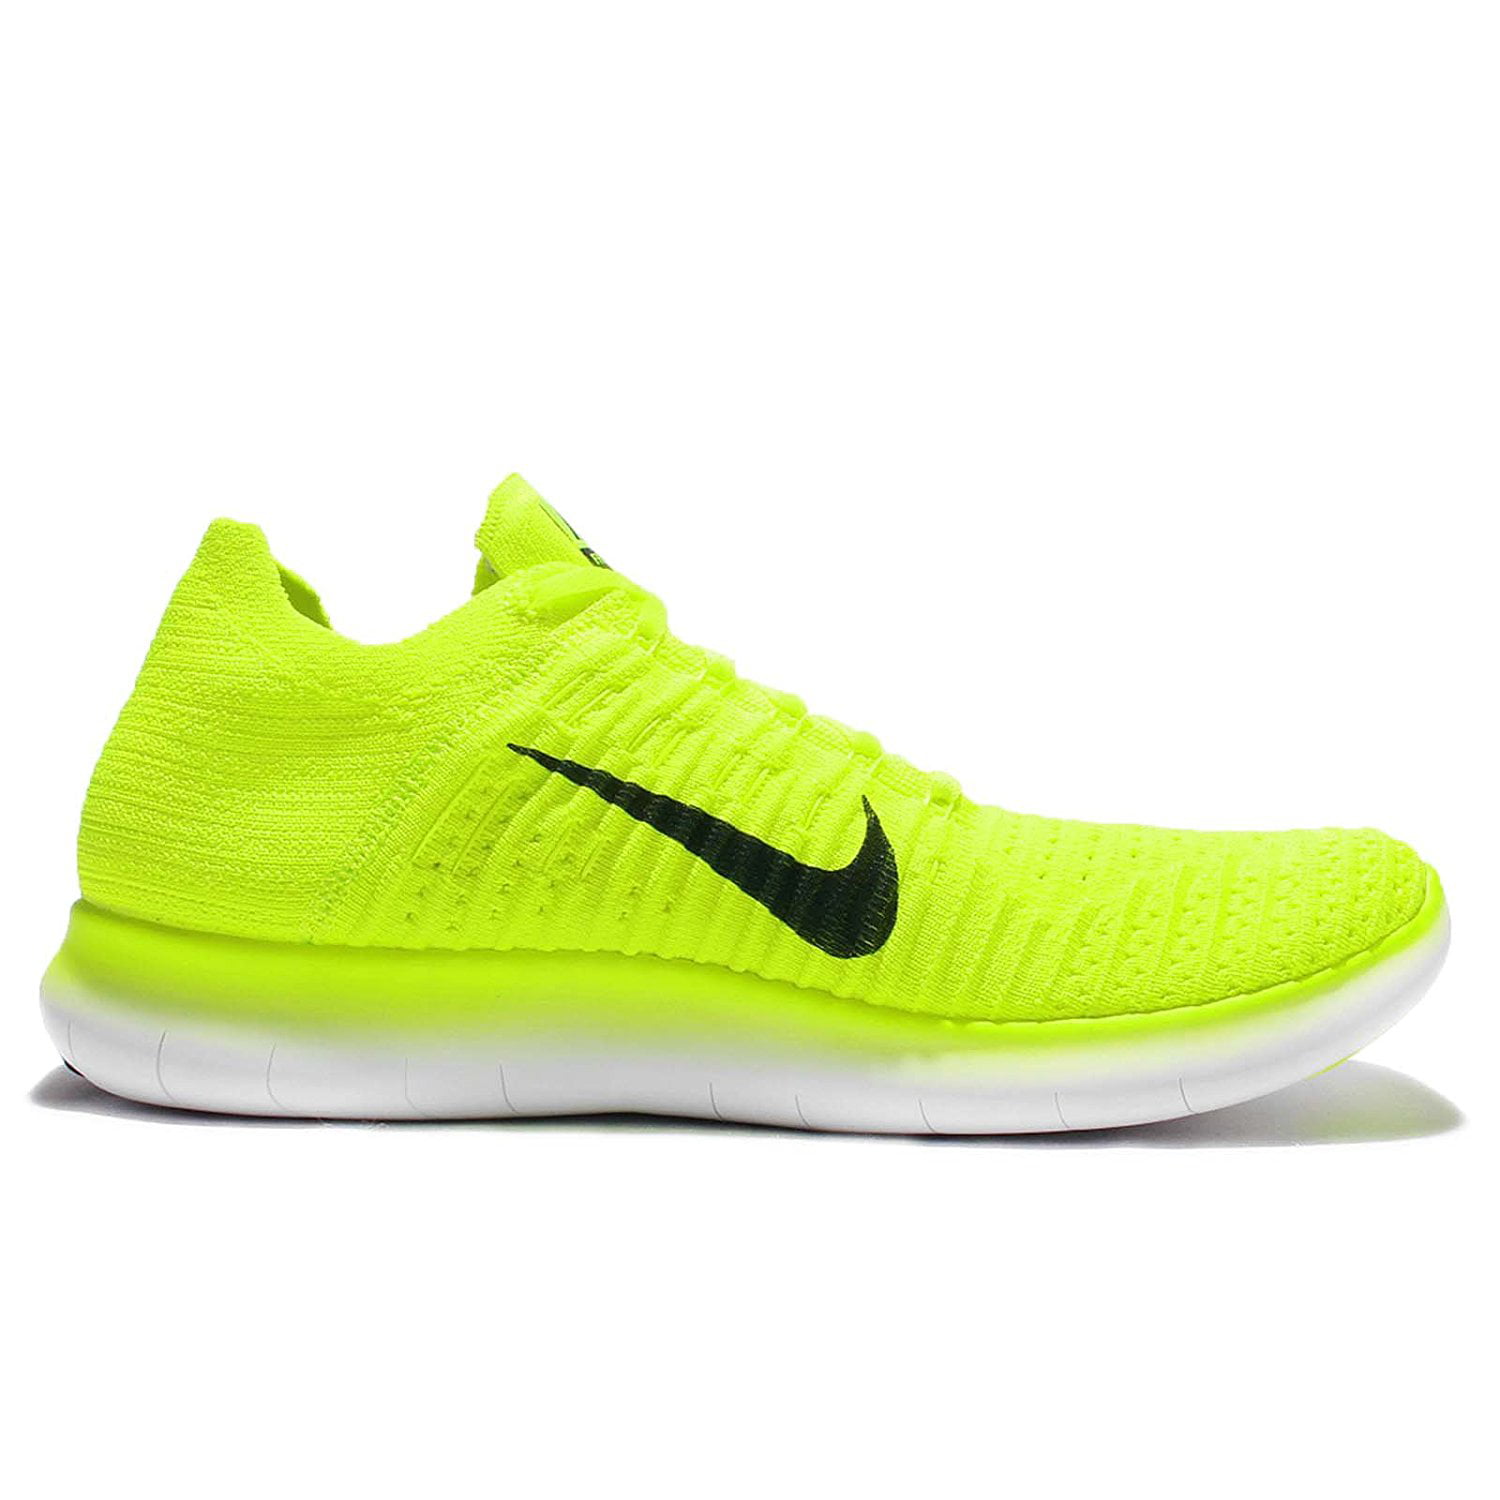 Nike Free Rn Running Shoe-Volt/Black-White - Walmart.com